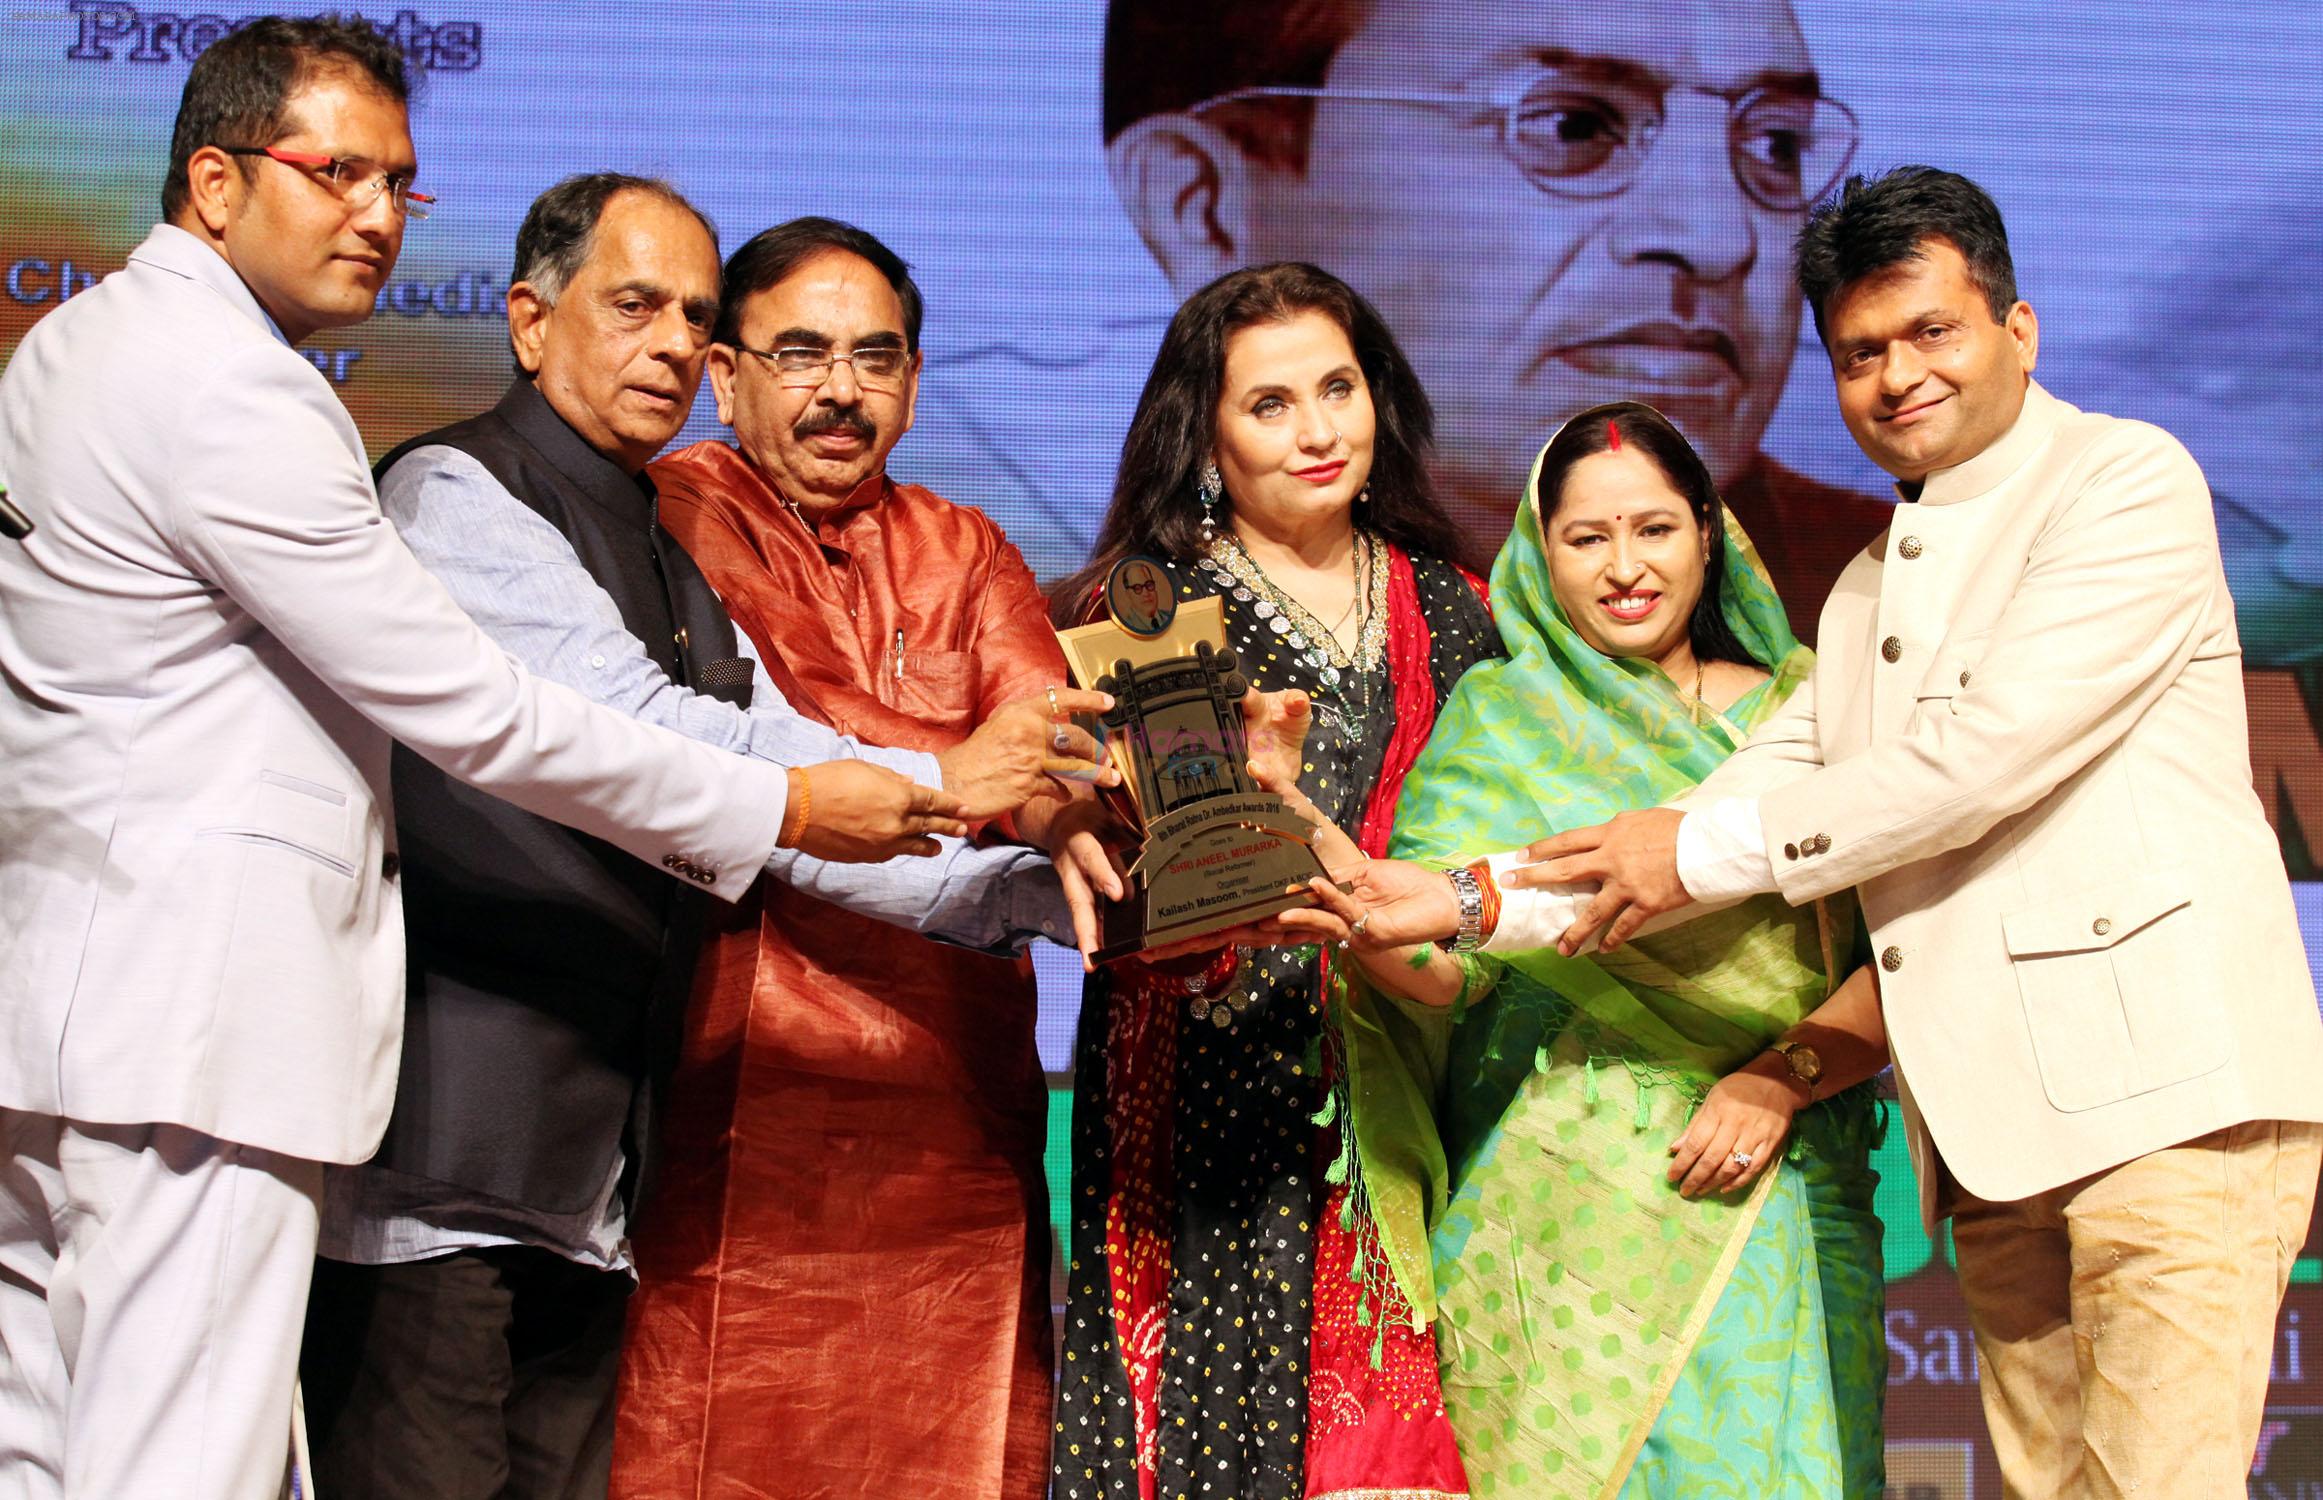 d b chand,pahlaj nihlani,mahendra nath pandey,salma agha,neelam sonkar 7 anil morarka at 6th Bharat Ratna Dr. Ambedkar Awards in Mumbai on 23rd May 2016